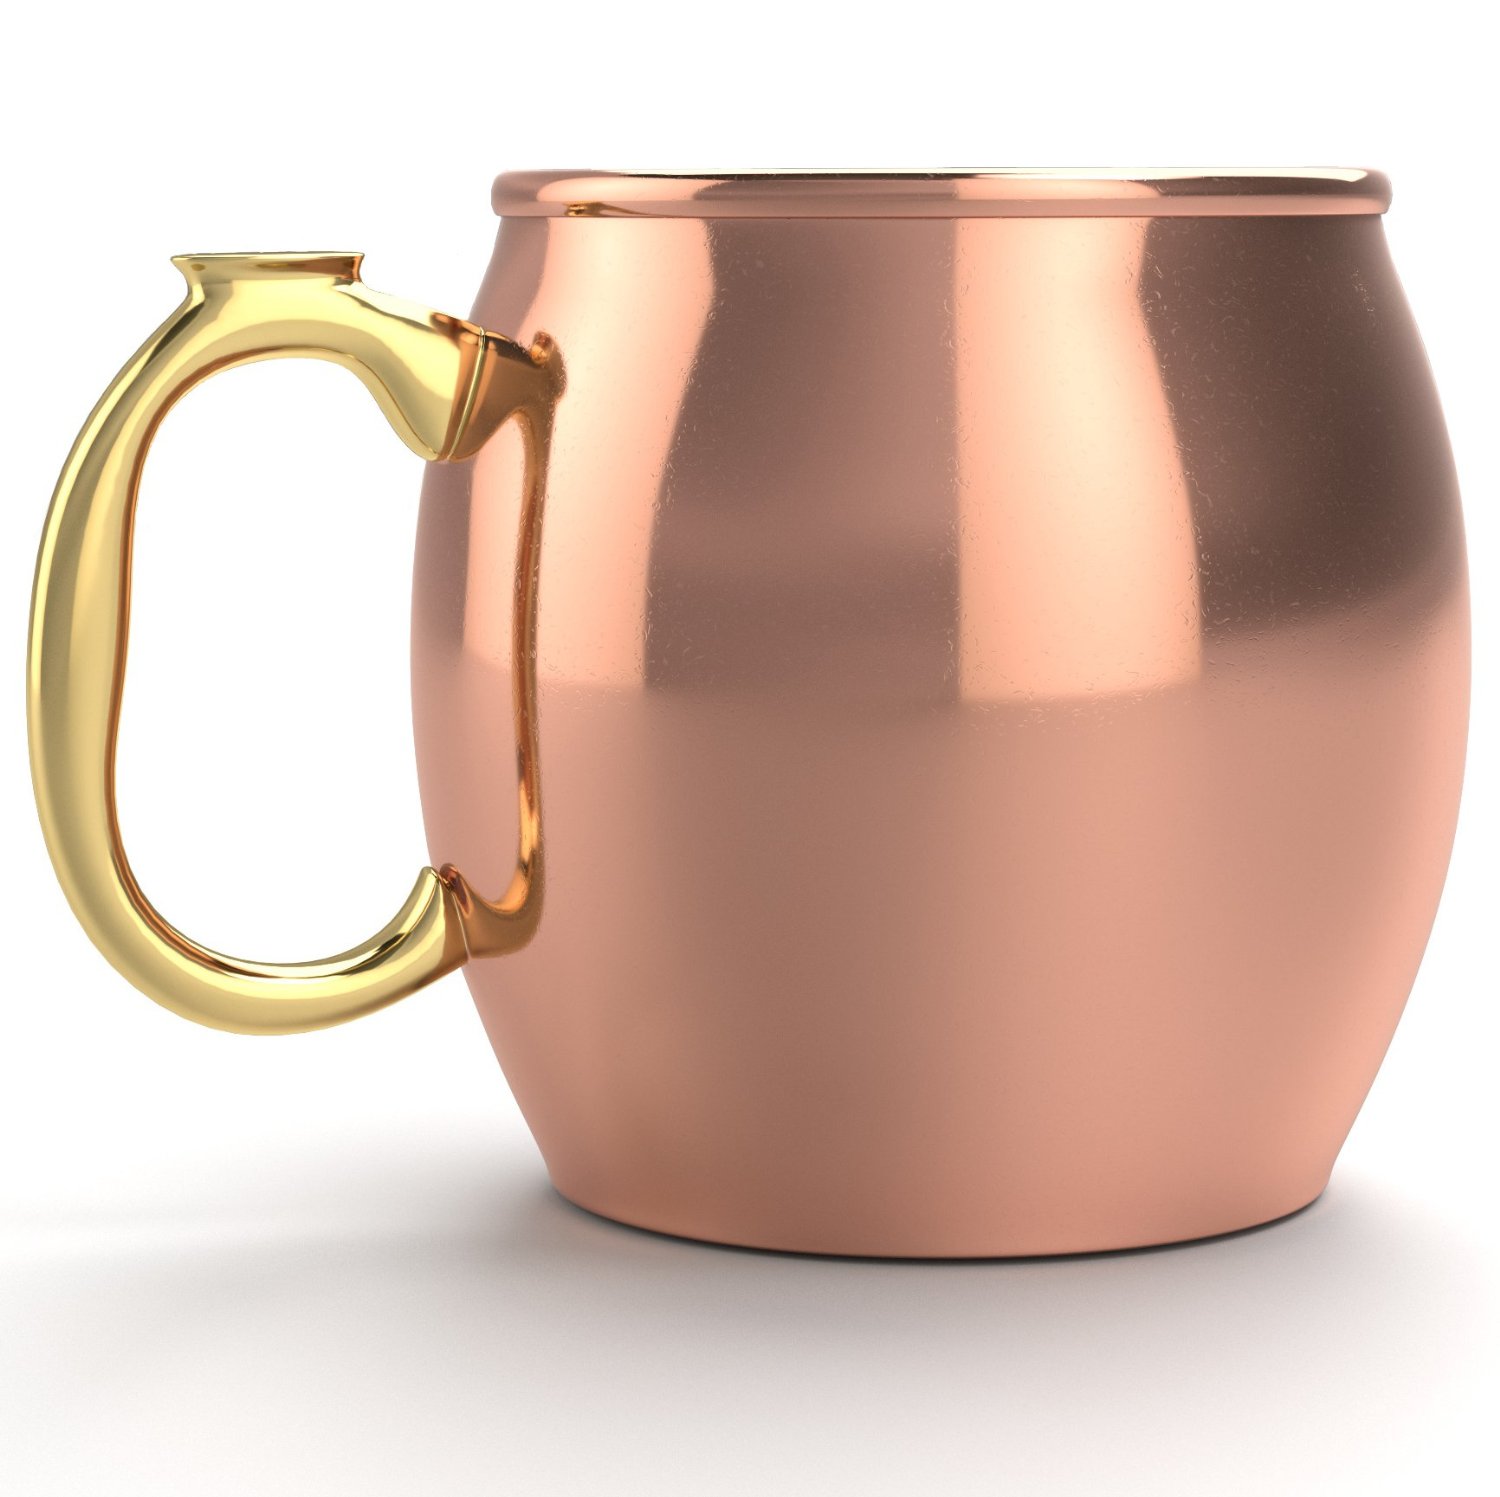 Moscow mule mug supplier china, stainless steel mule mugs copper mule mugs